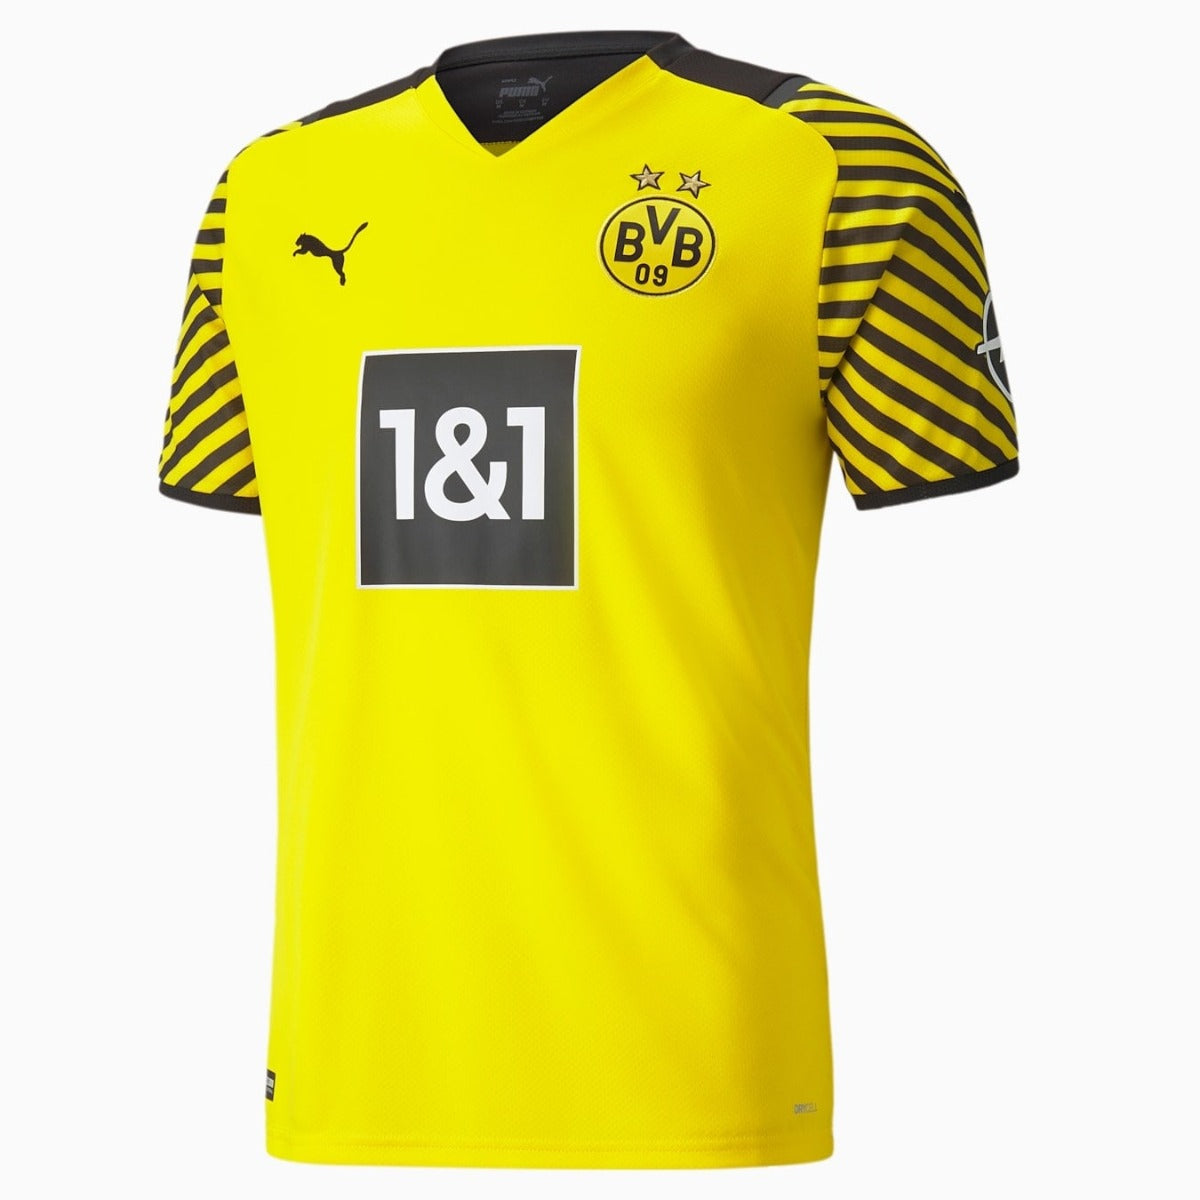 Achteruit gazon verkeer Puma 2021-22 Borussia Dortmund Home jersey - Yellow-Black